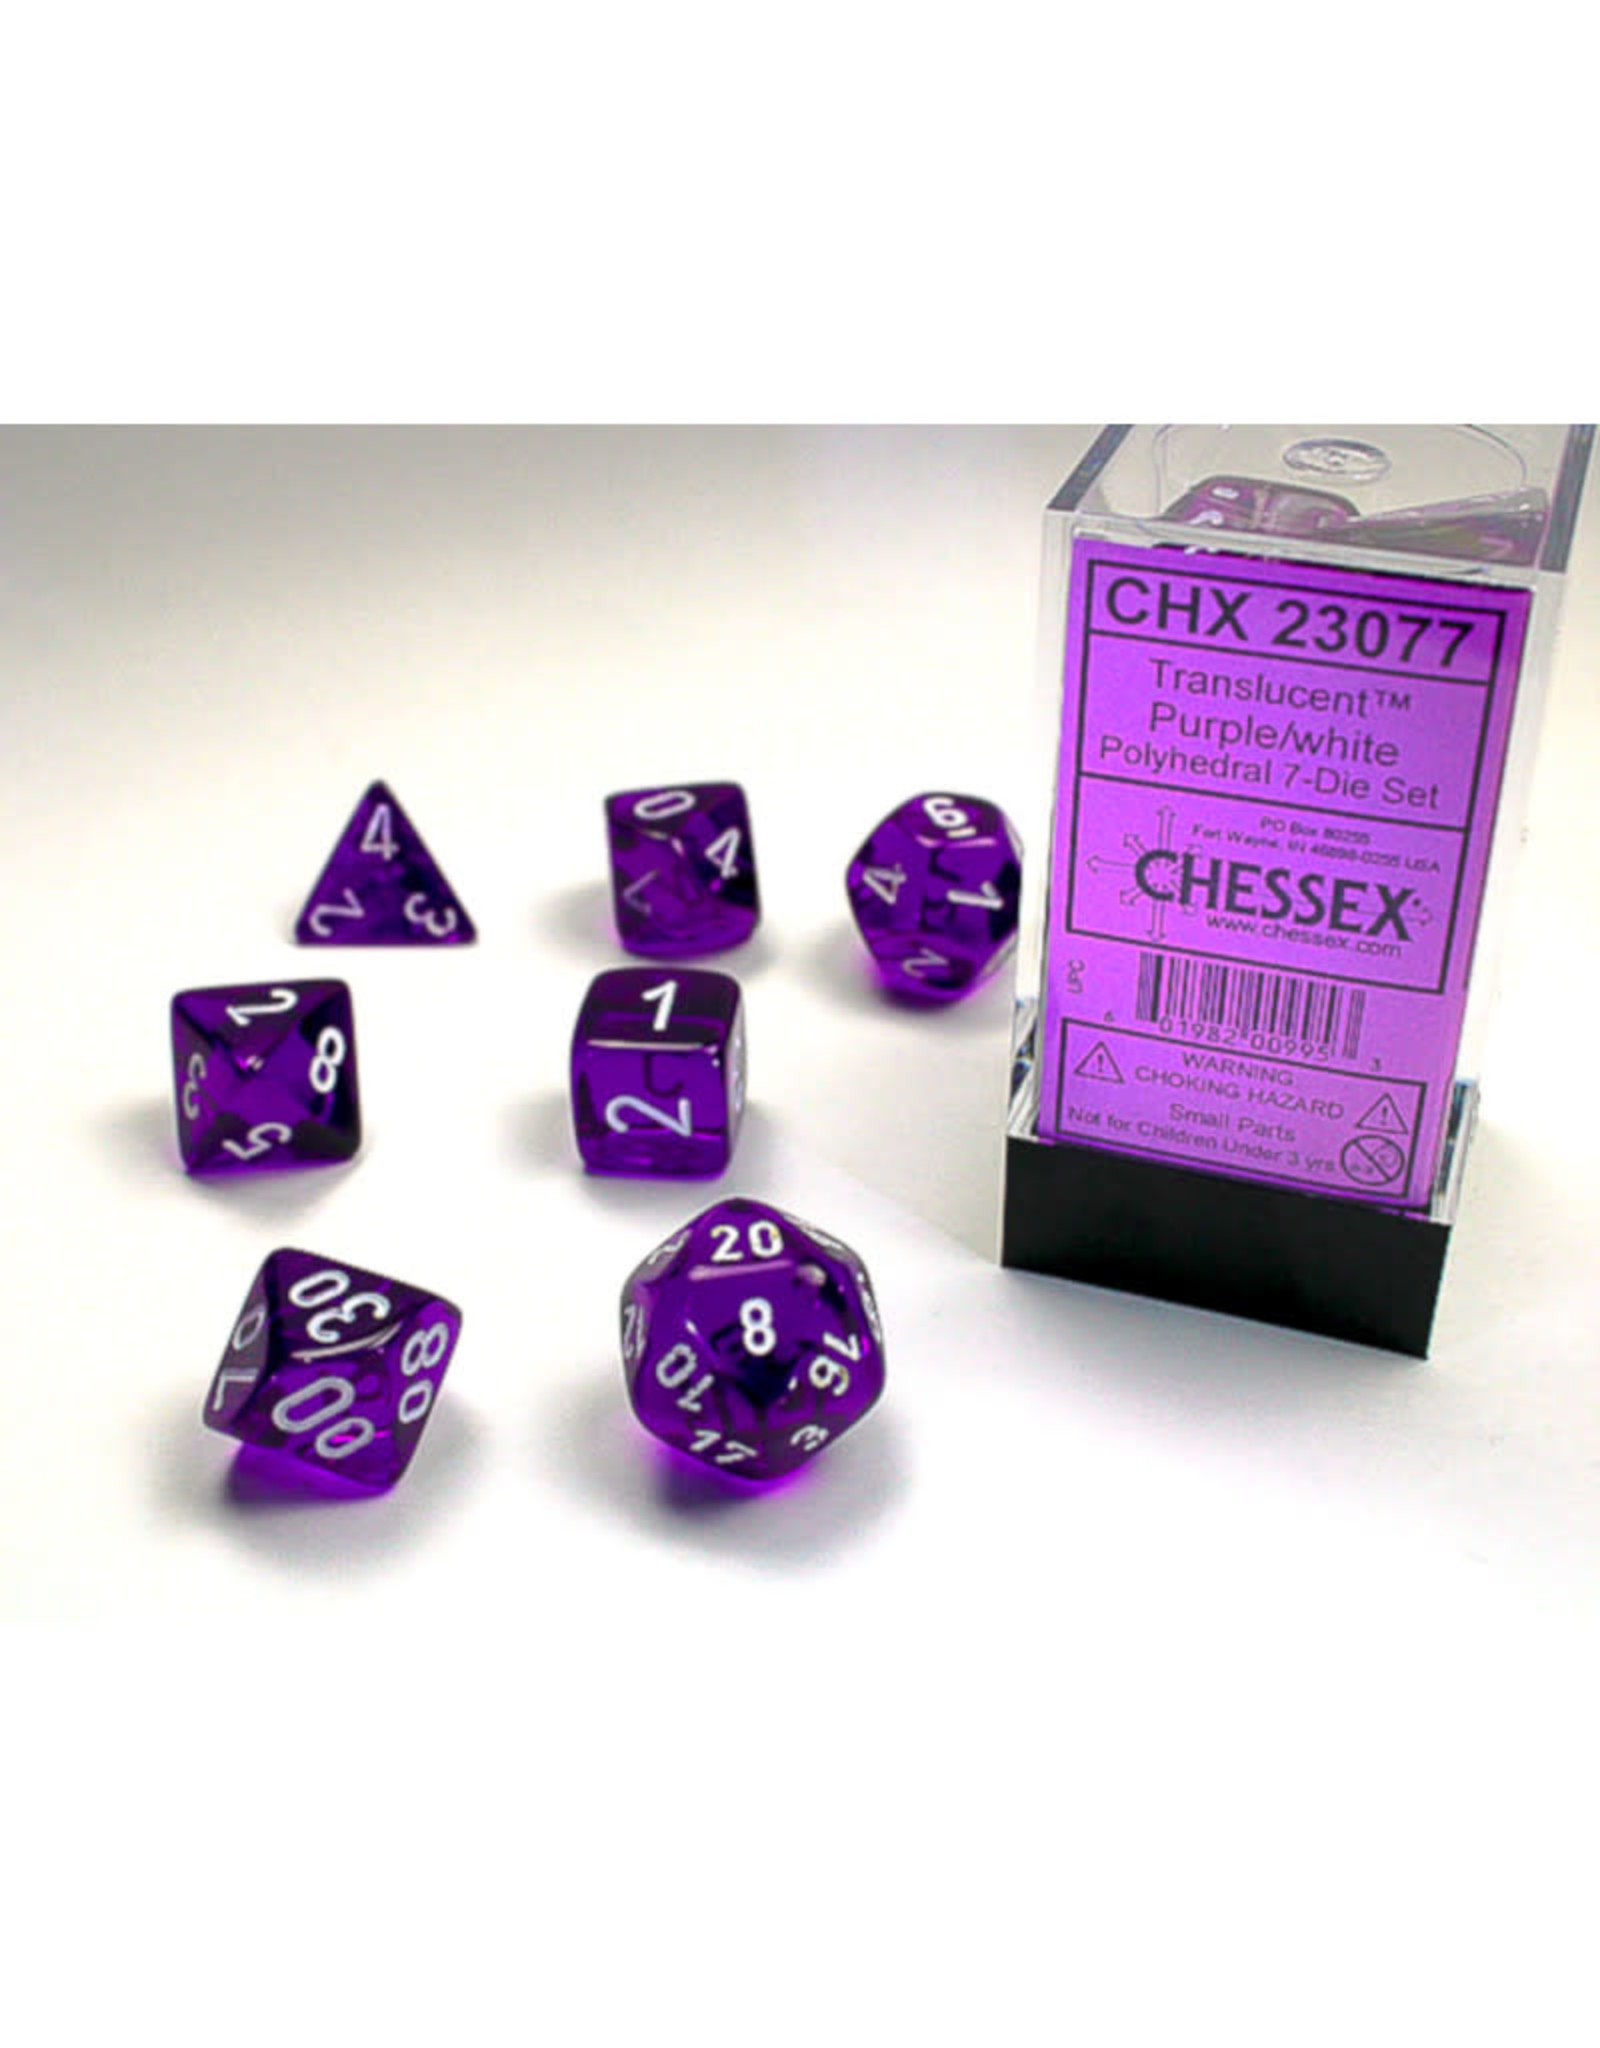 Chessex Polyhedral Dice Set: Translucent Purple/White (7)